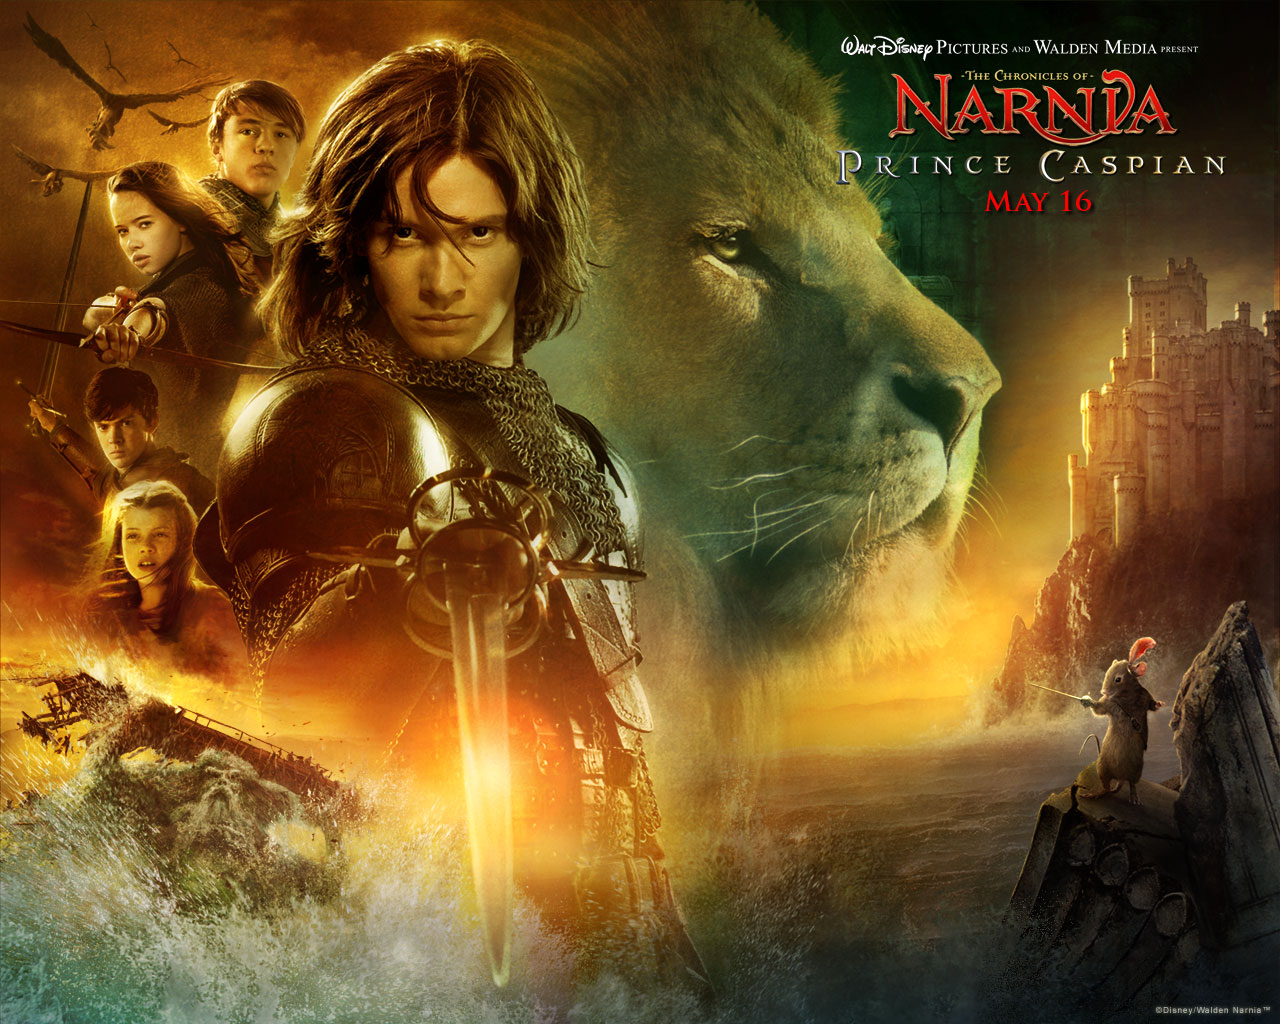 Le Monde de Narnia et le Prince Caspian